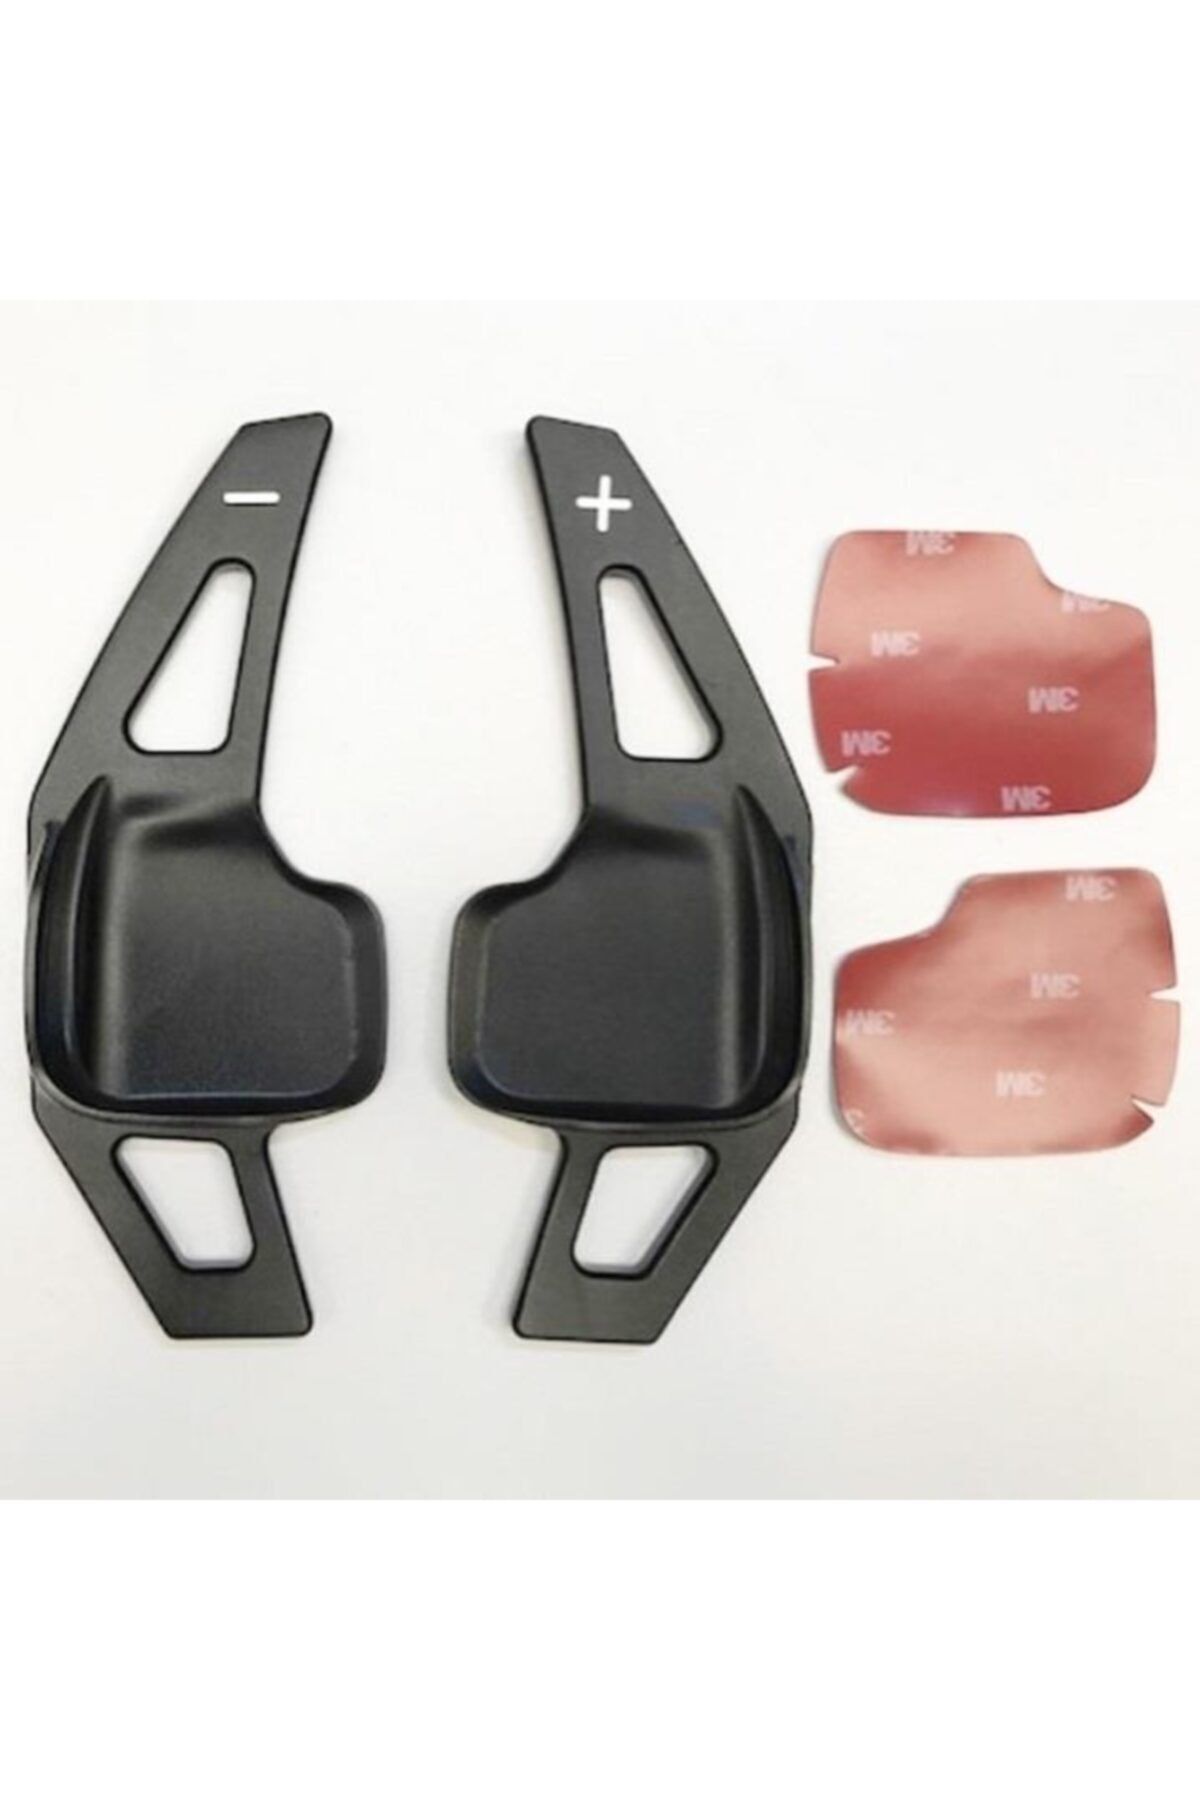 OLED GARAJ Bmw 3, 4, 5 Serisi İçin Uyumlu Kulakçık Pedal Shıft Paddle Shift F1 Siyah